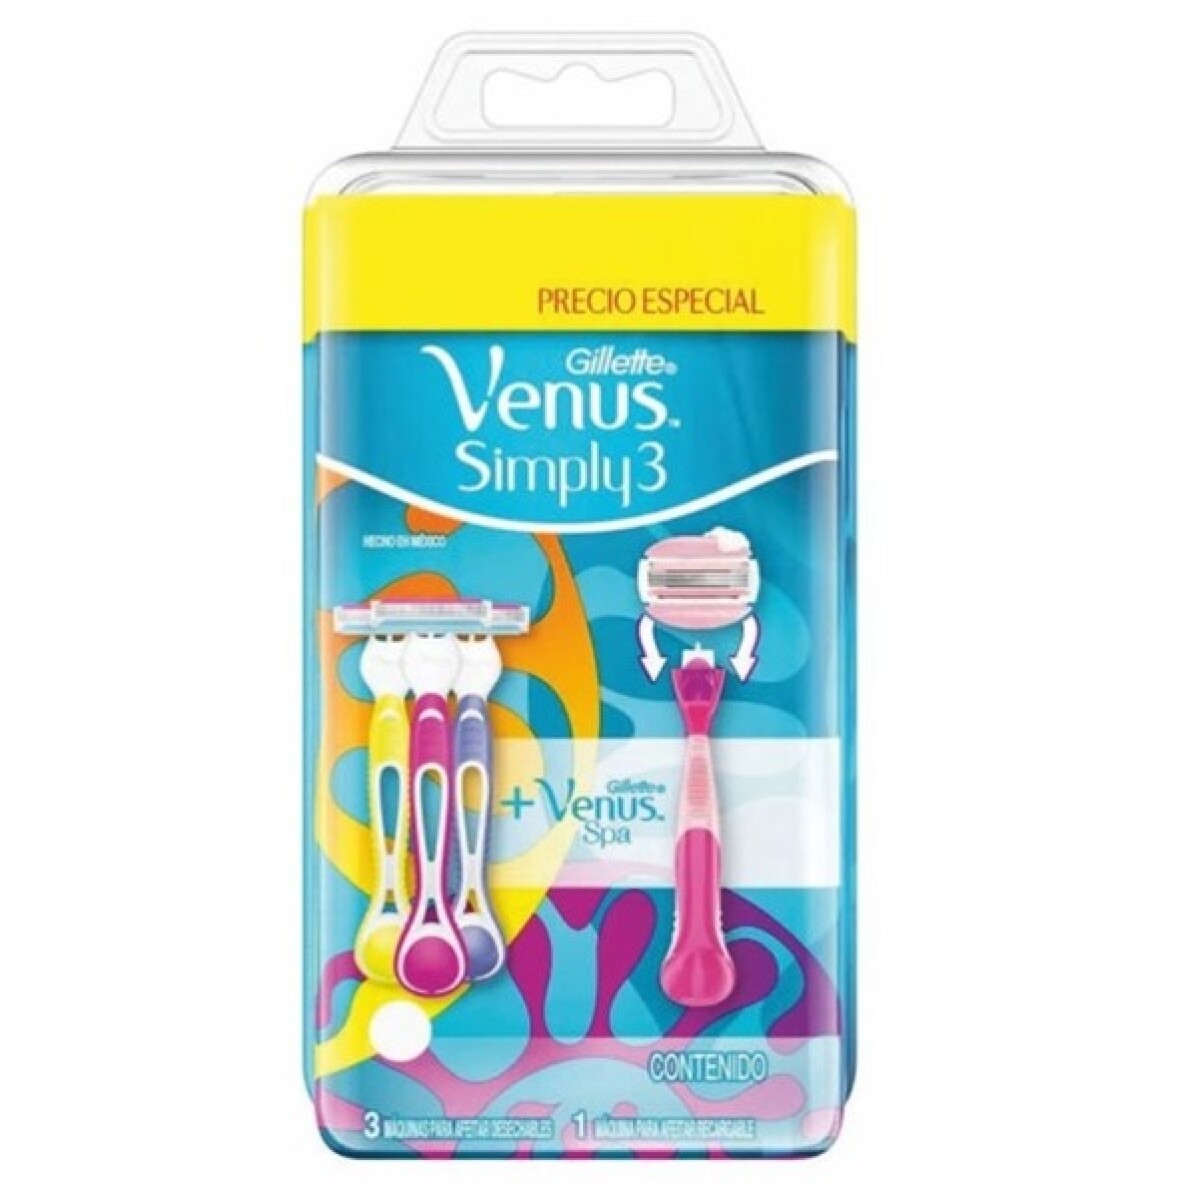 Afeitadora Venus 3 Simply 3 Uds. + Venus Razor Spa 